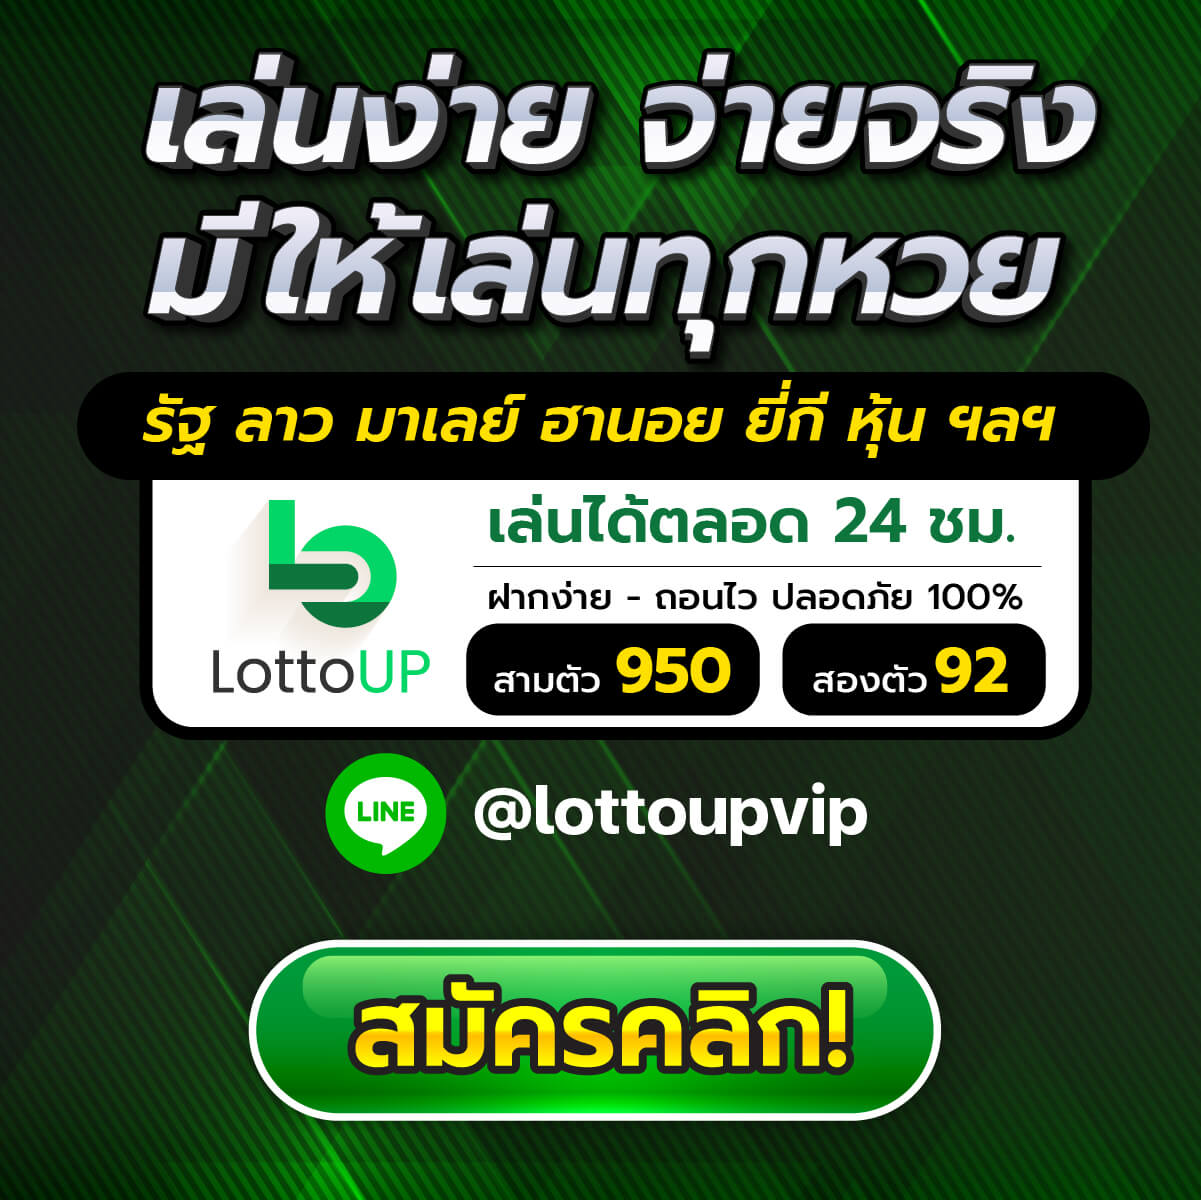 Lottoup เล่นง่ายจ่ายจริง มีให้เล่นทุกหวย